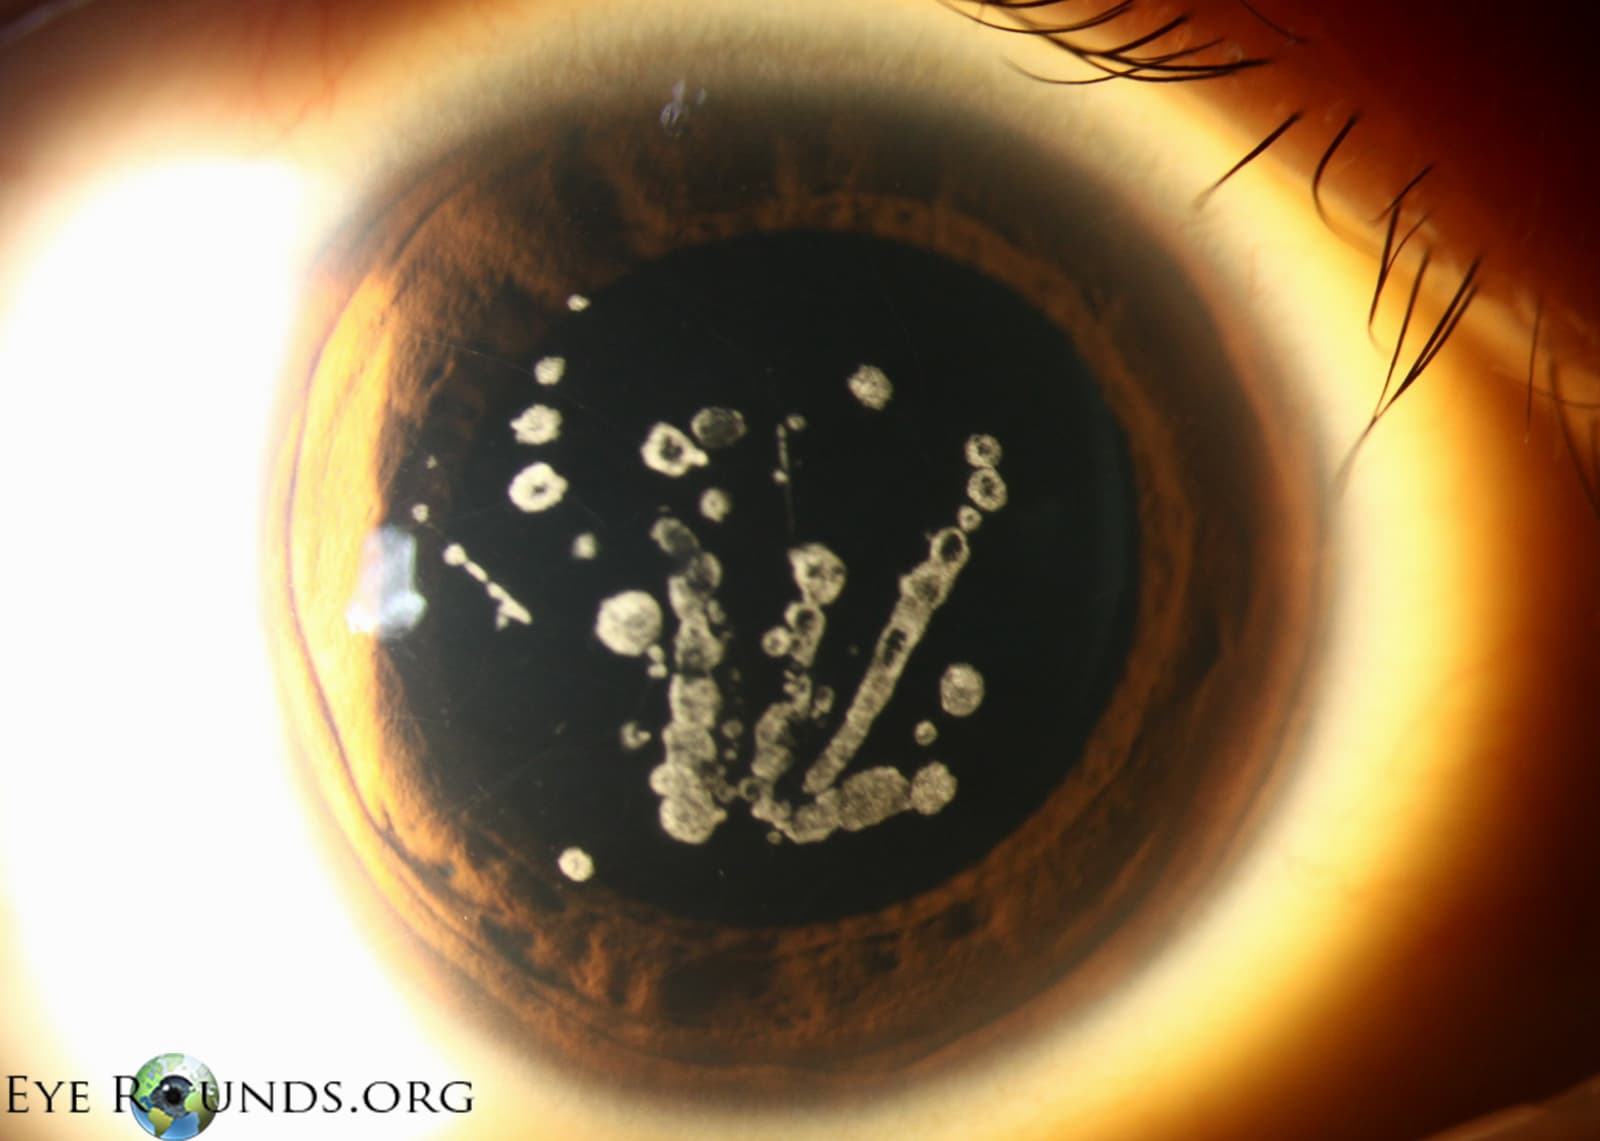 Granular corneal dystrophy